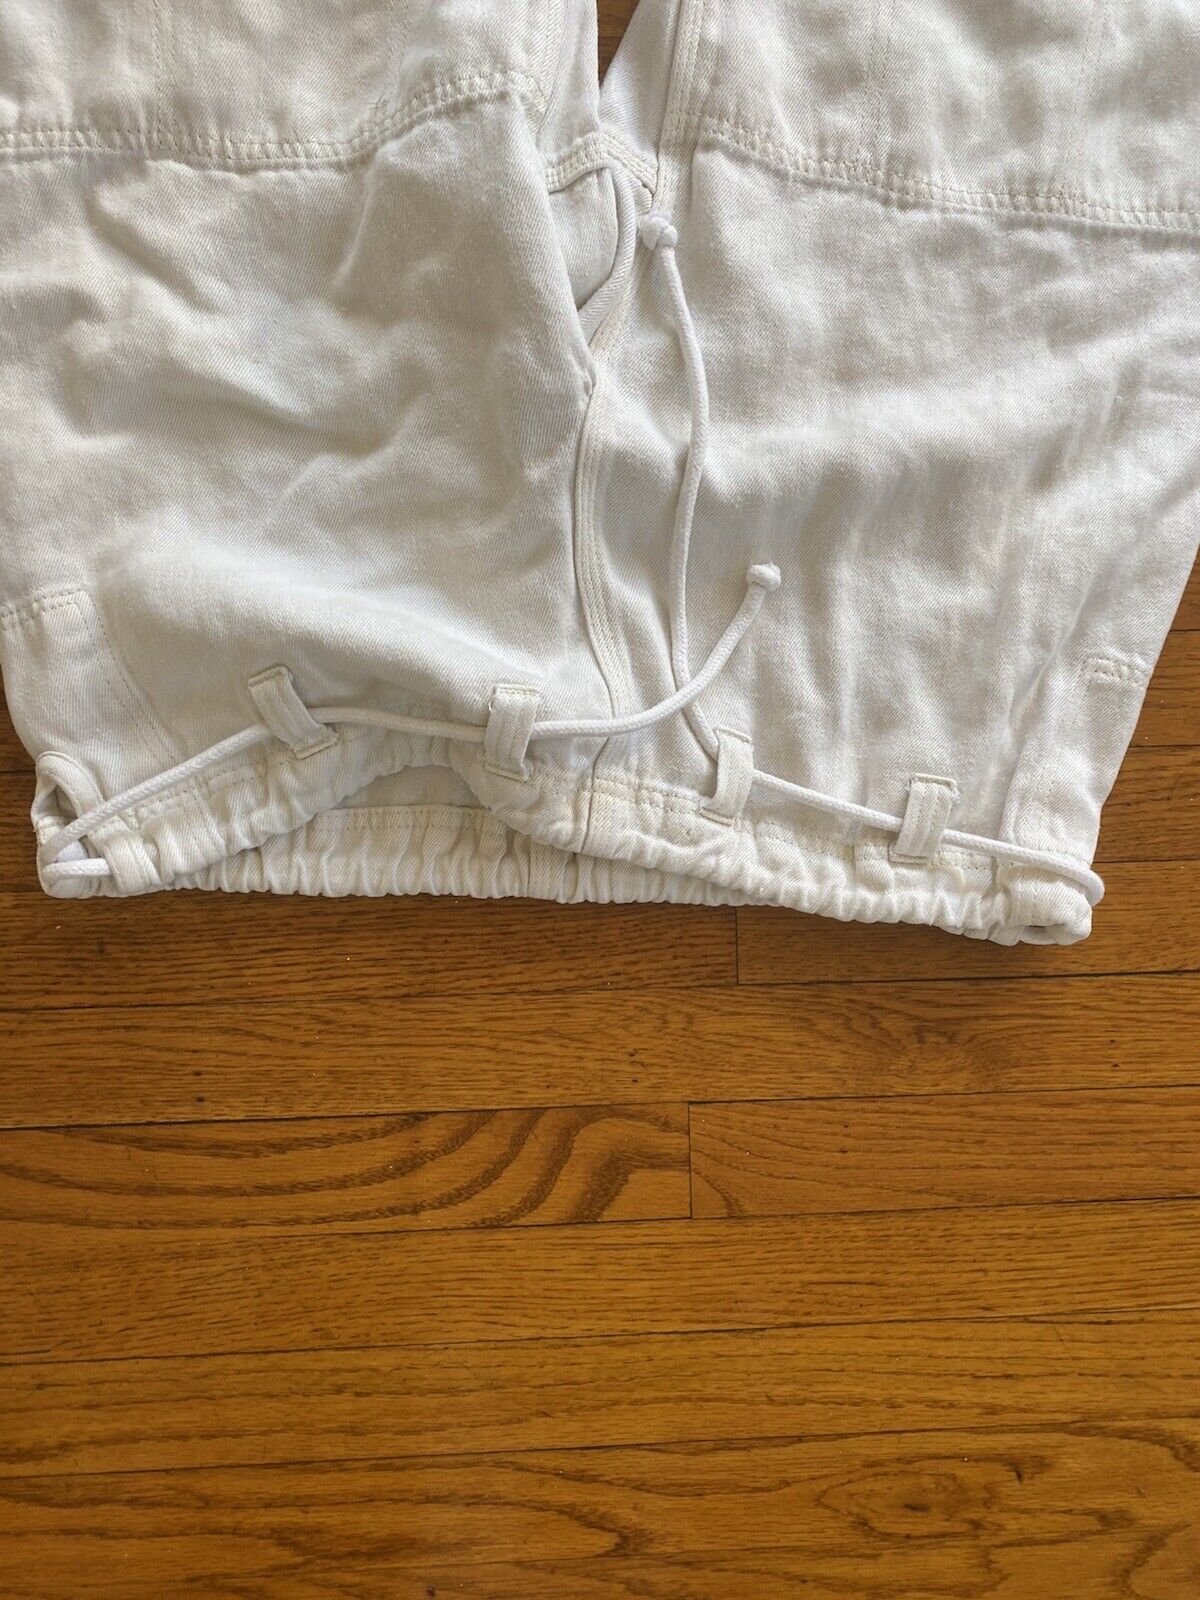 Ivory Canvas Drawstring Pants - Unbranded - Size Medium